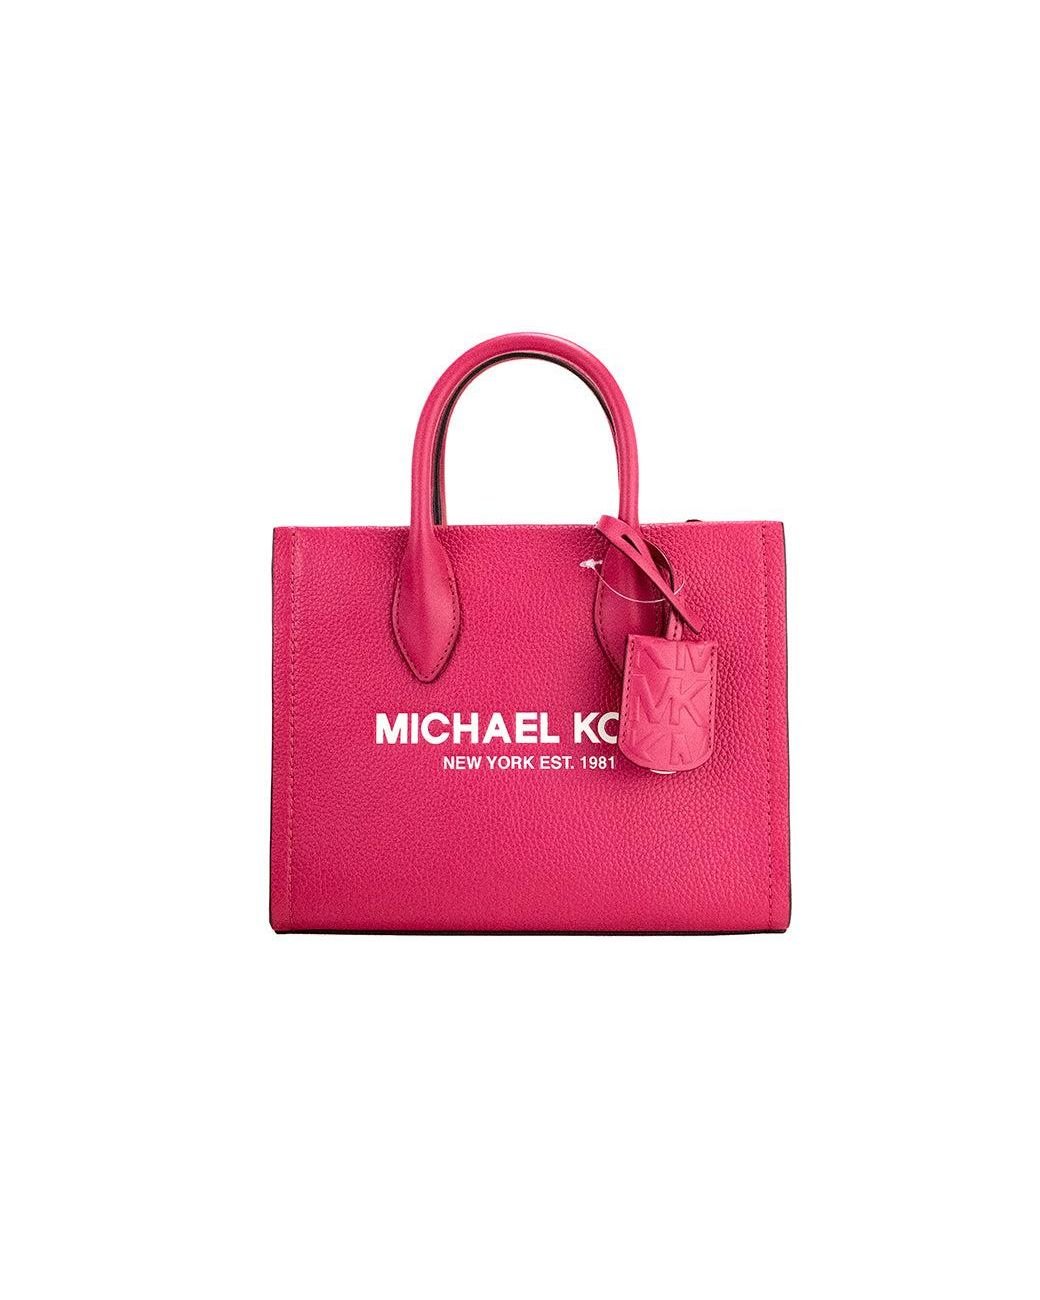 Michael Kors Bags $119 Shipped